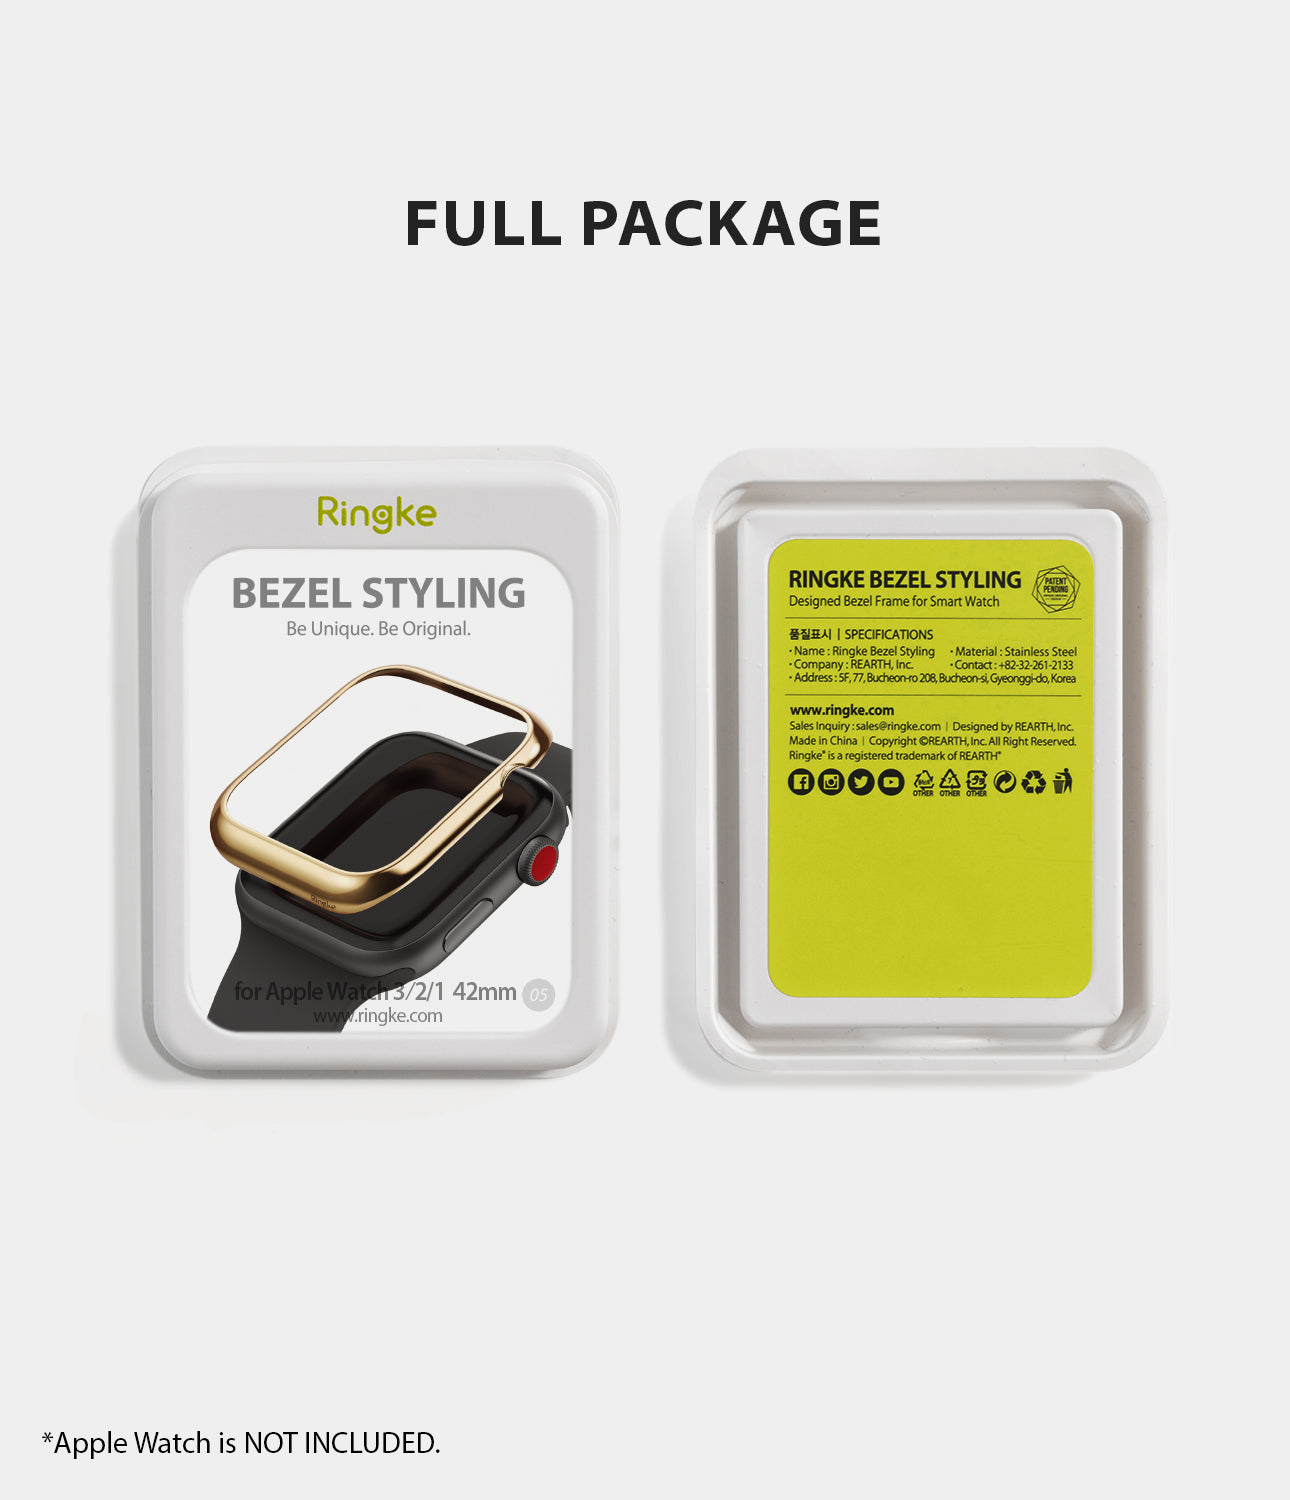 apple watch 3 2 1 42mm case ringke bezel styling stainless steel frame cover 42-05 full package